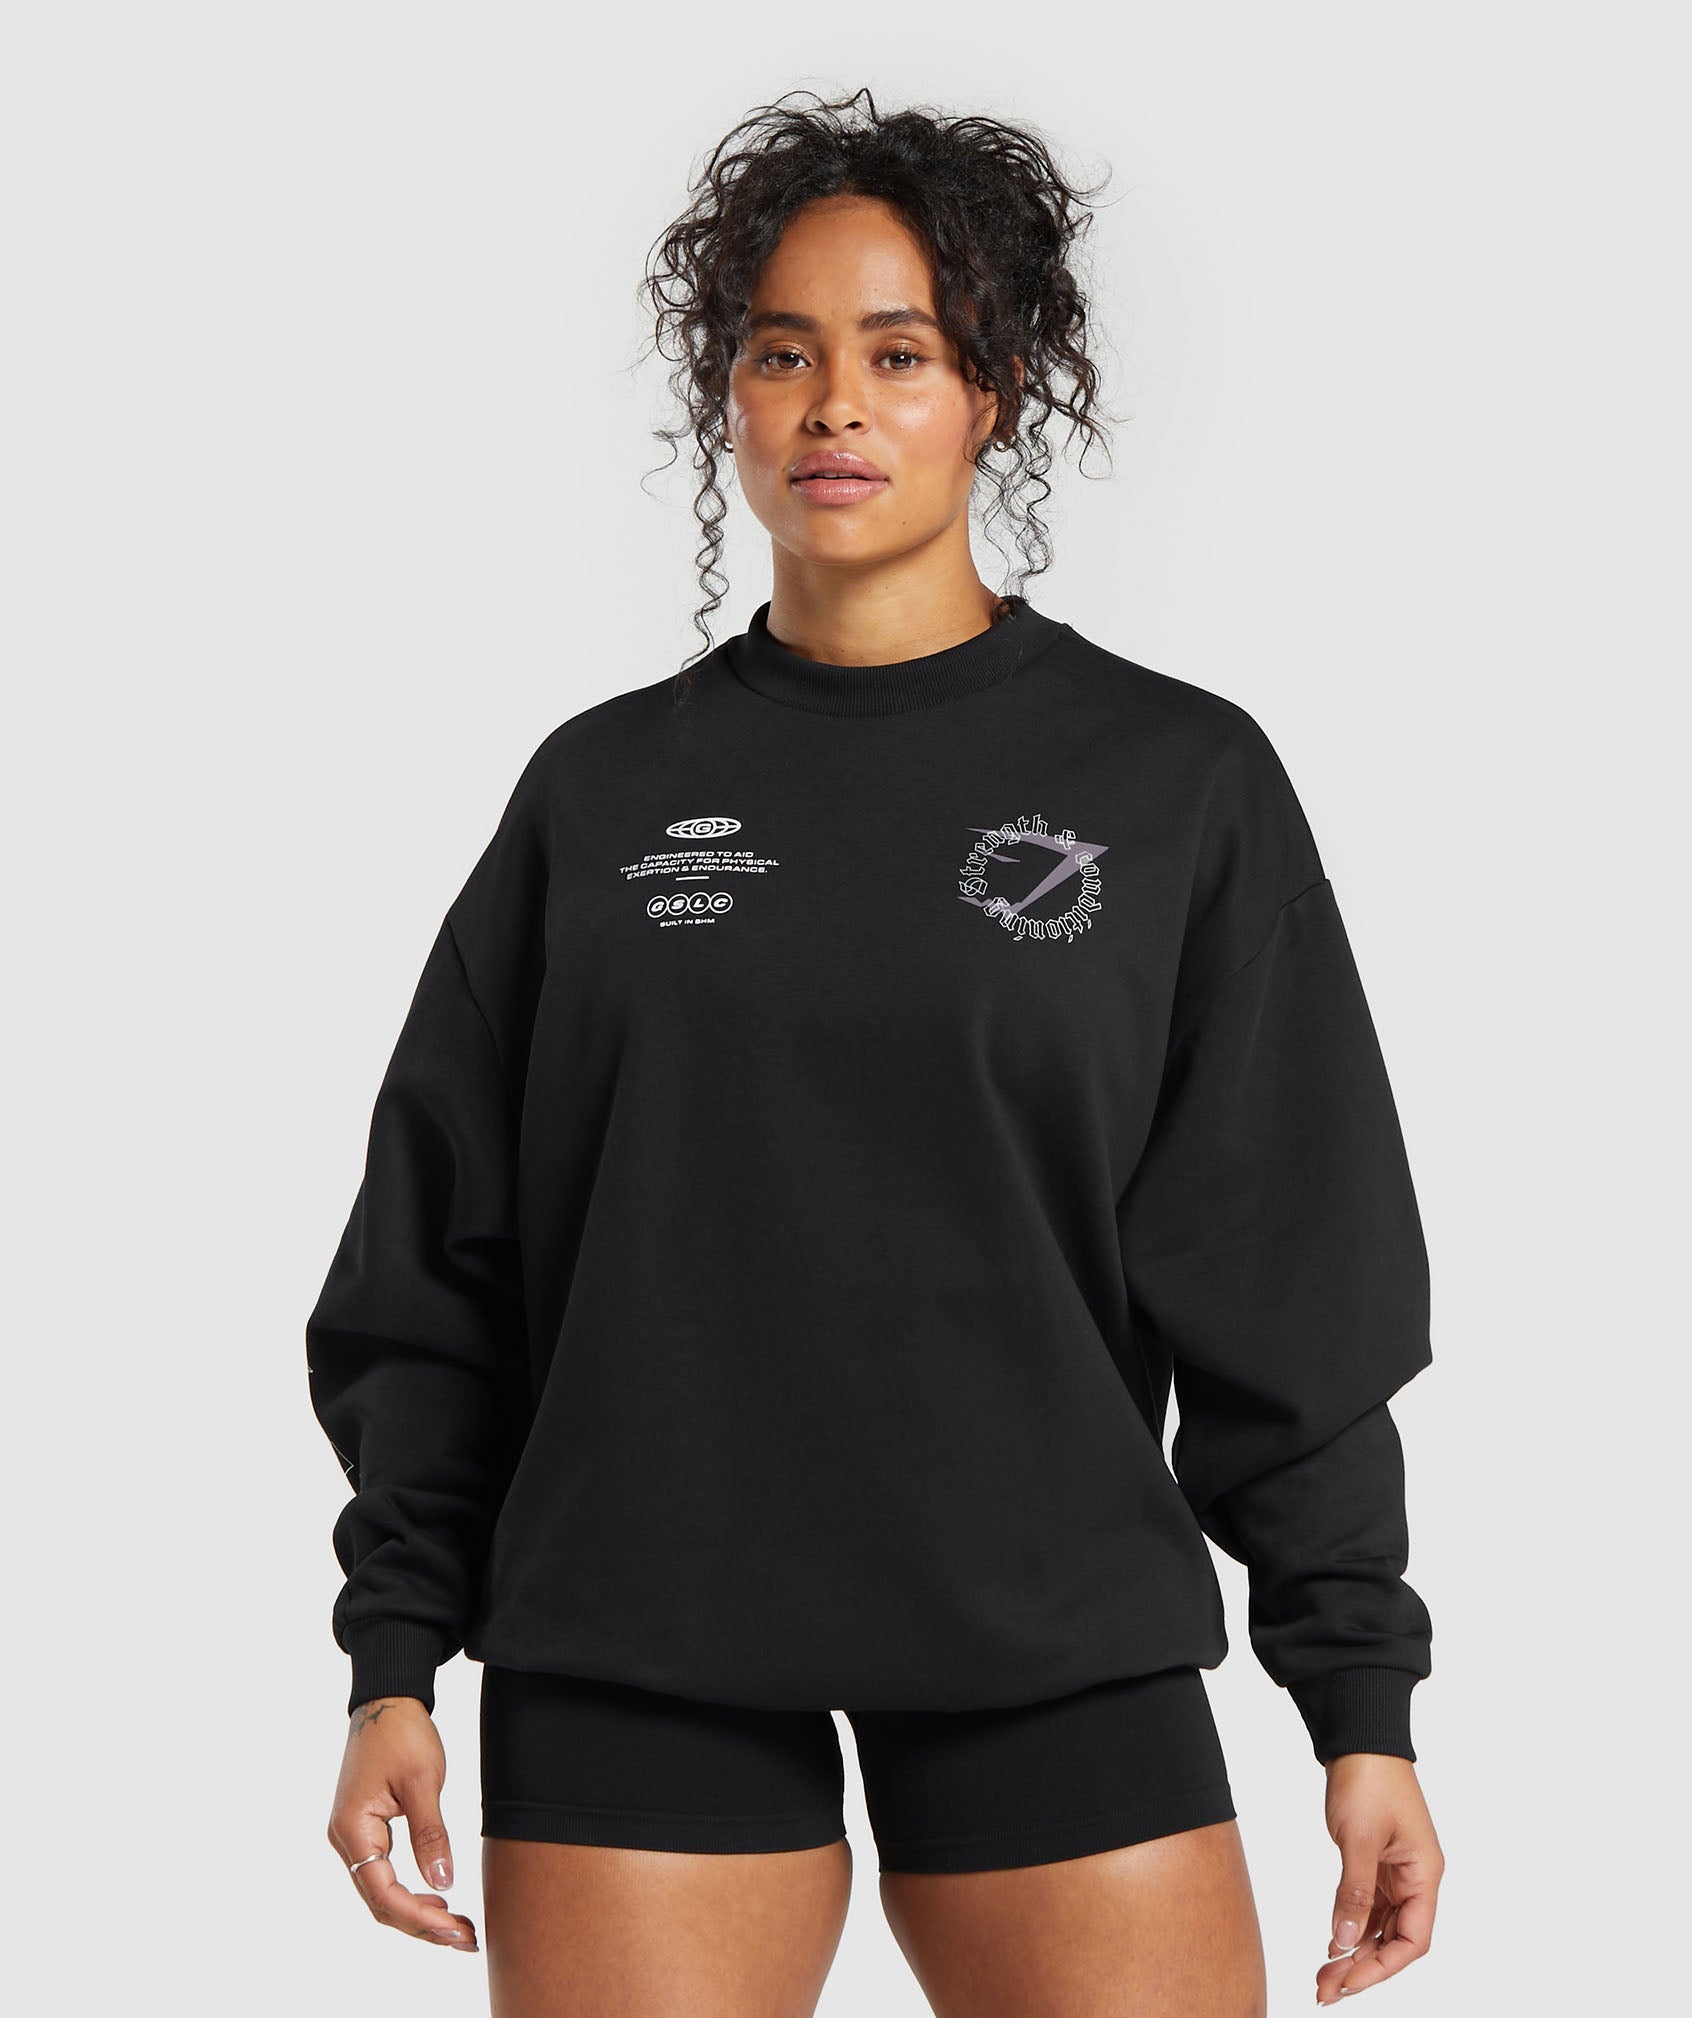 Strength & Conditioning Oversized Sweatshirt in Black - view 1